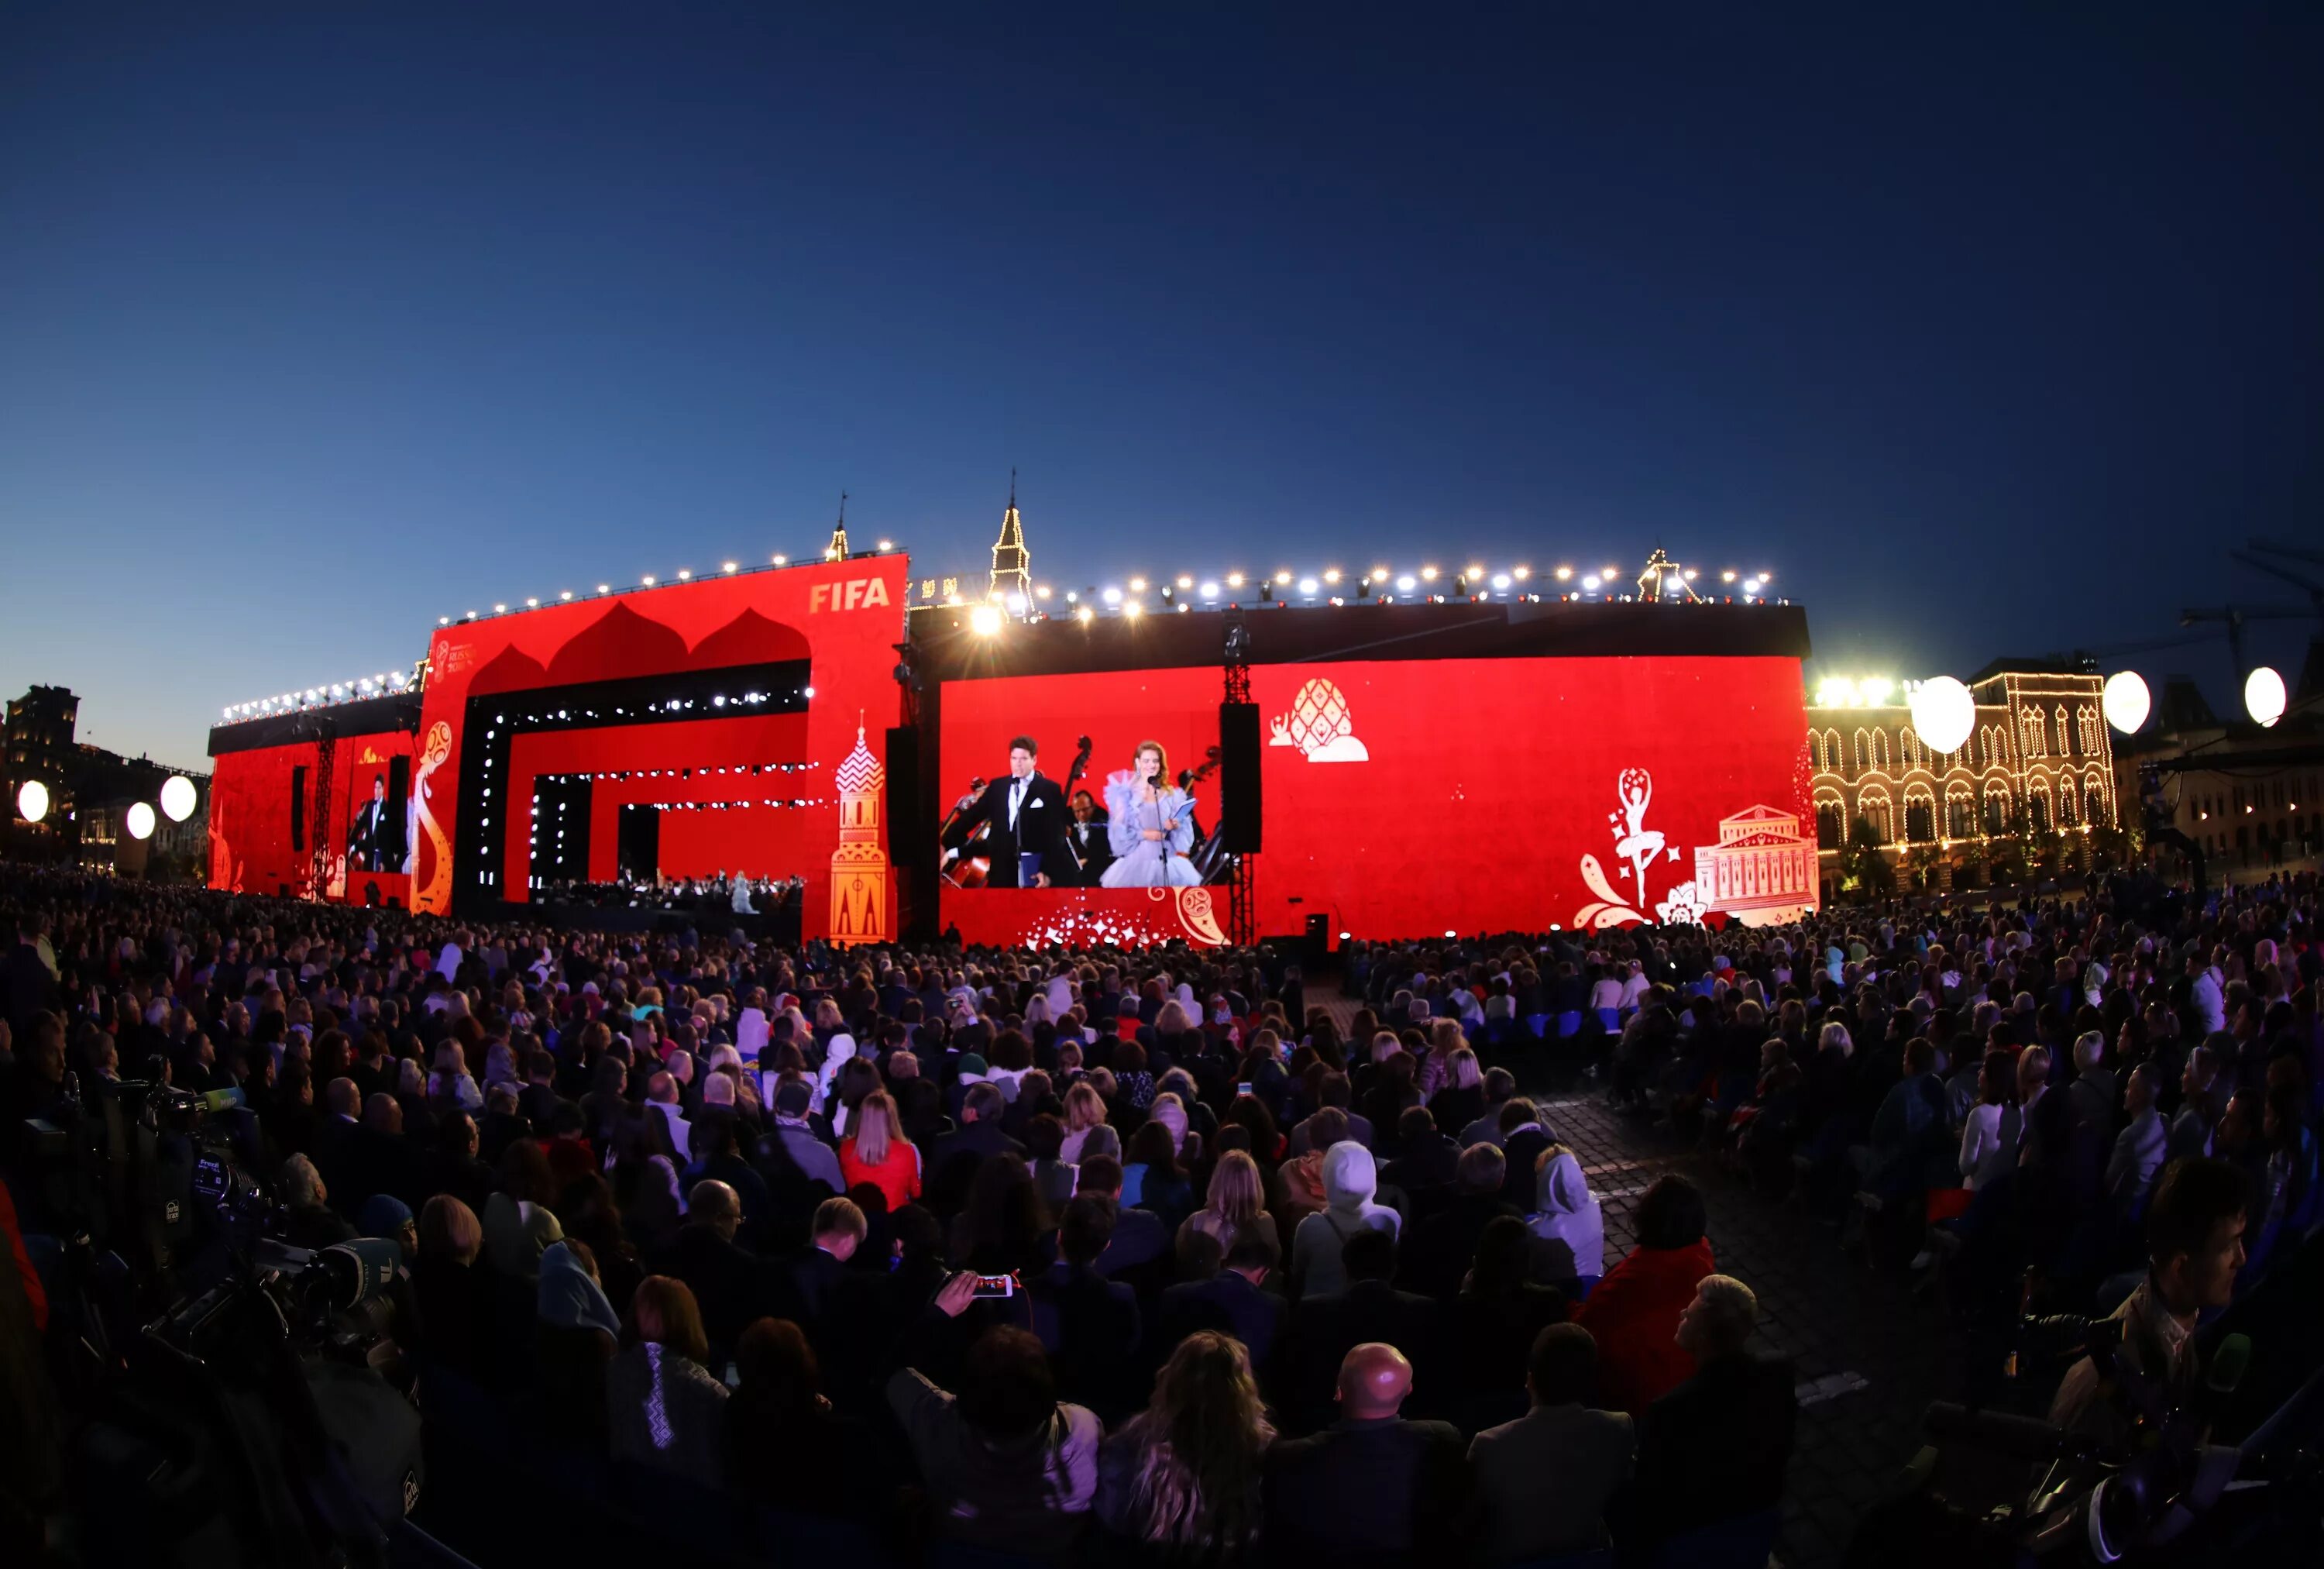 Концерт на красной площади. Концертная сцена на площади. Красный концерт. Сцена на красной площади